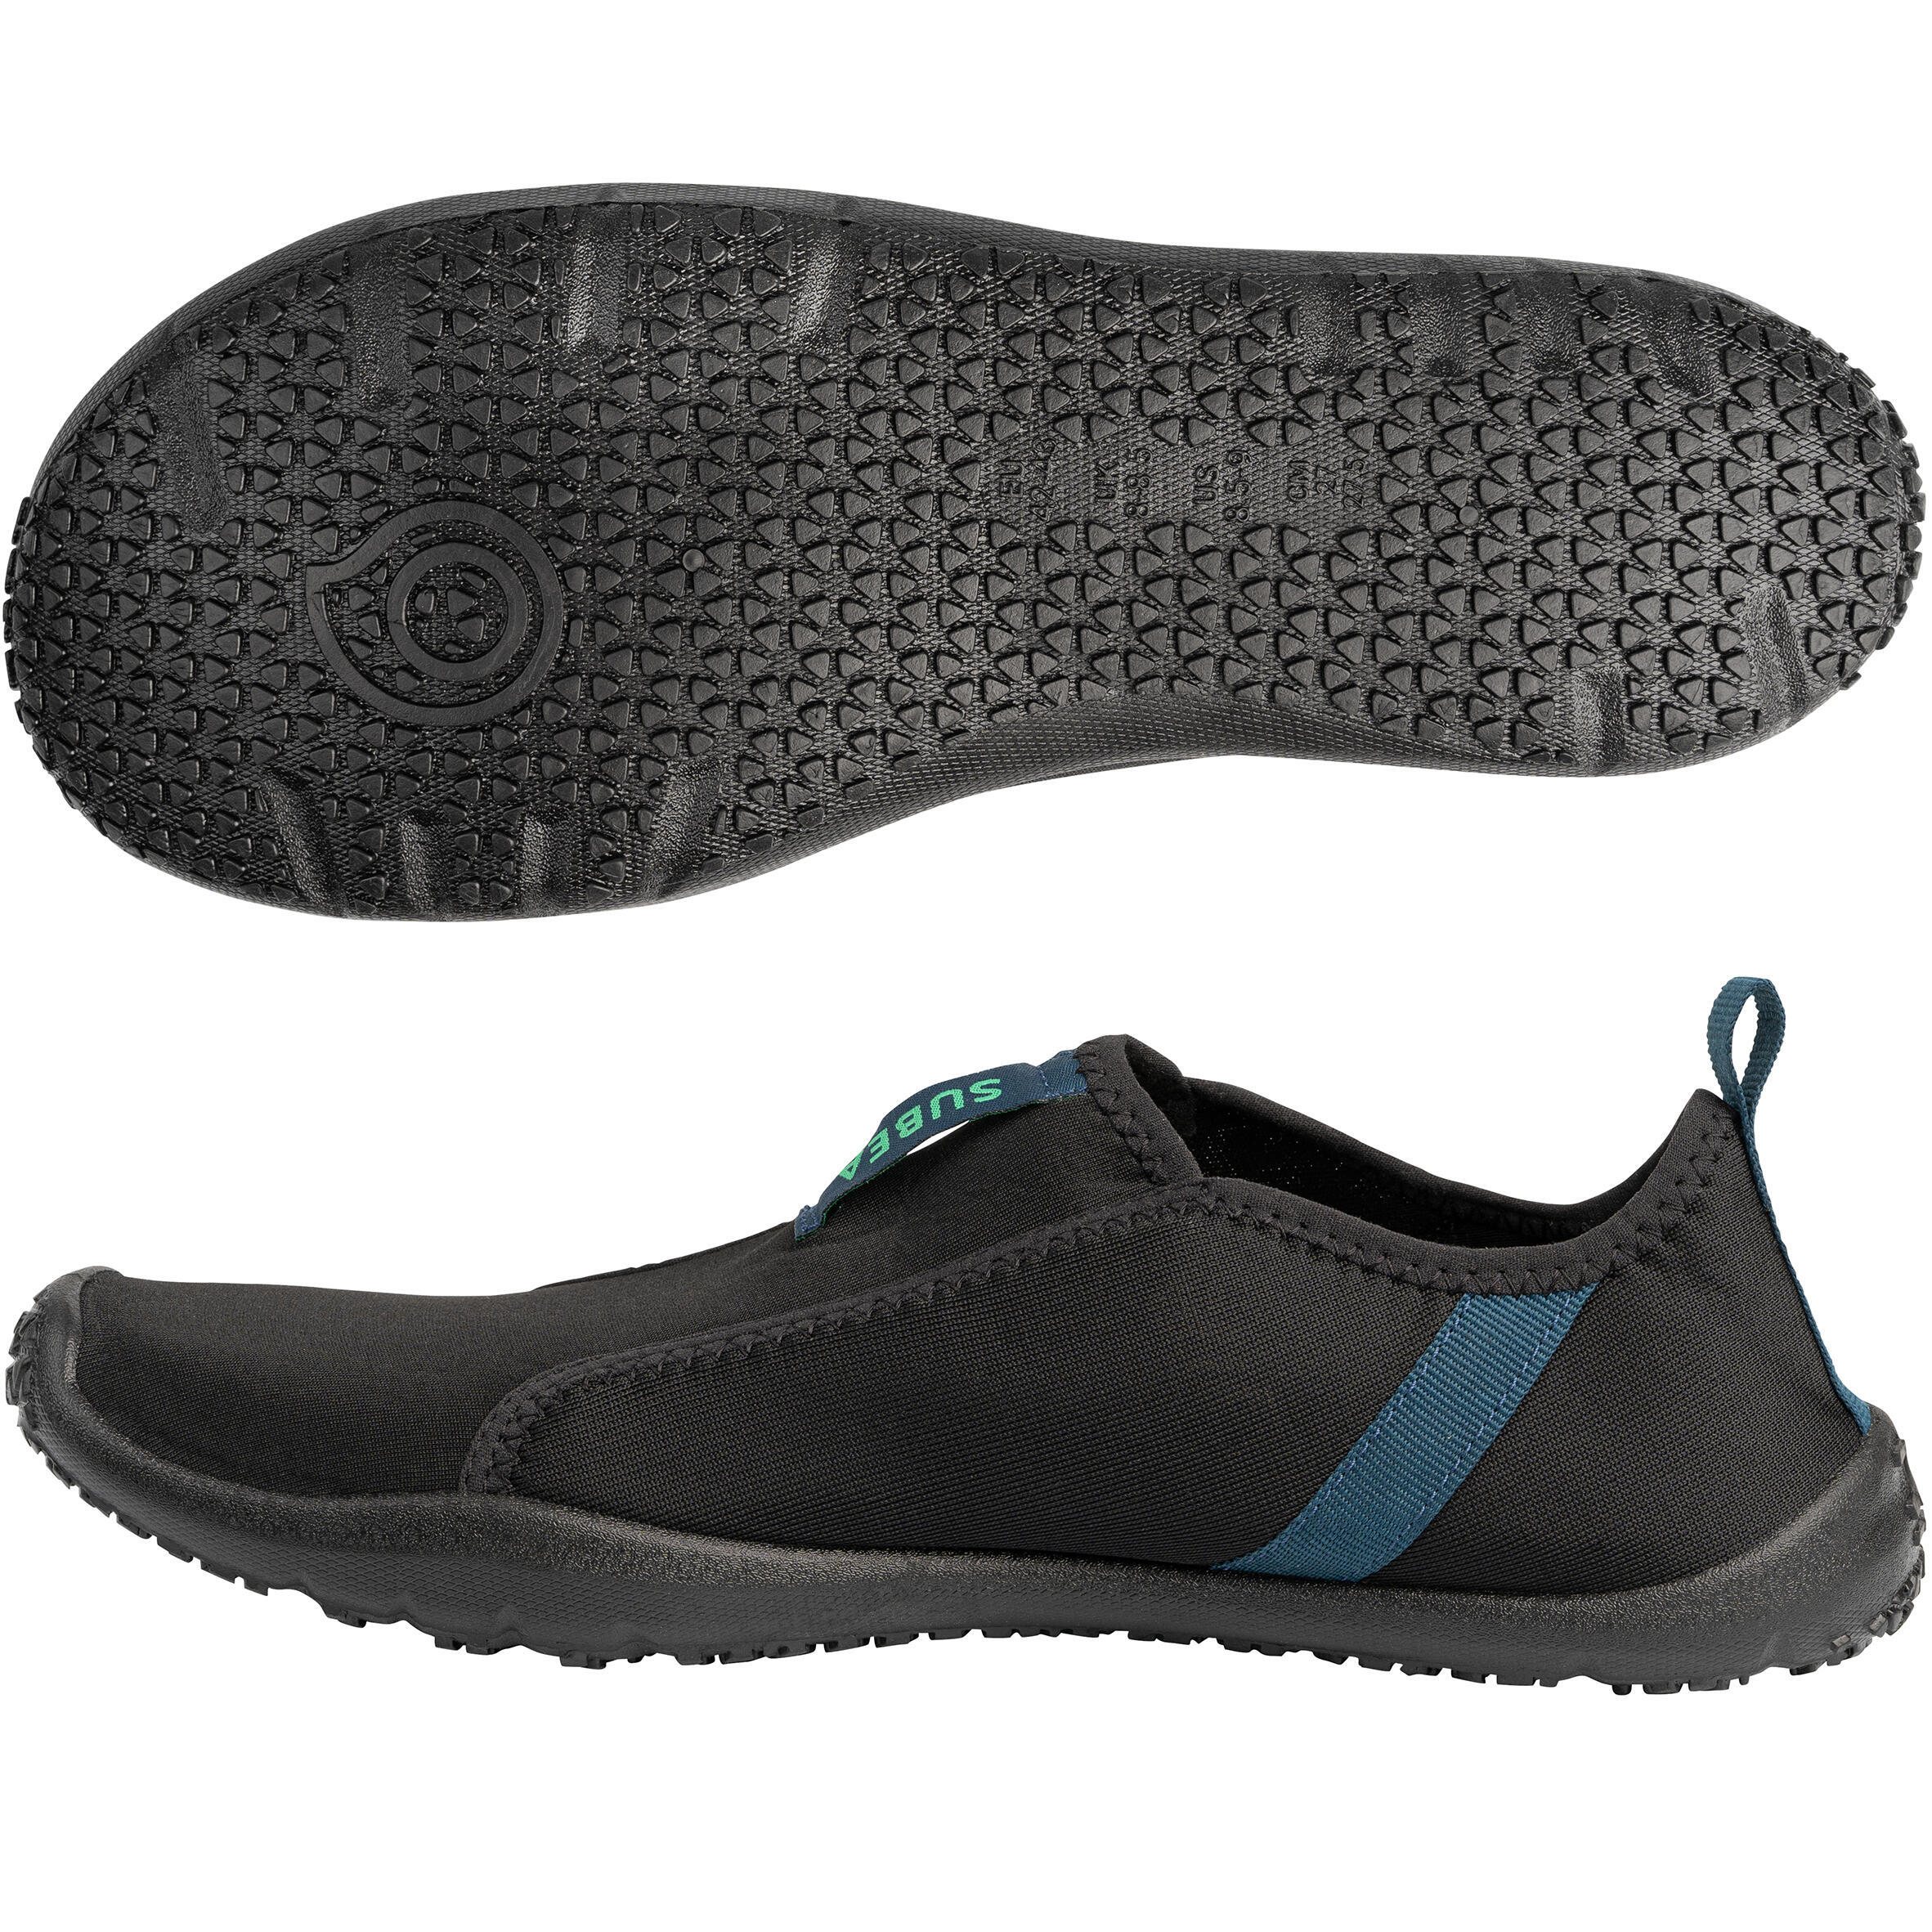 Adult Elasticated Water Shoes Aquashoes 120 - Black 6/10